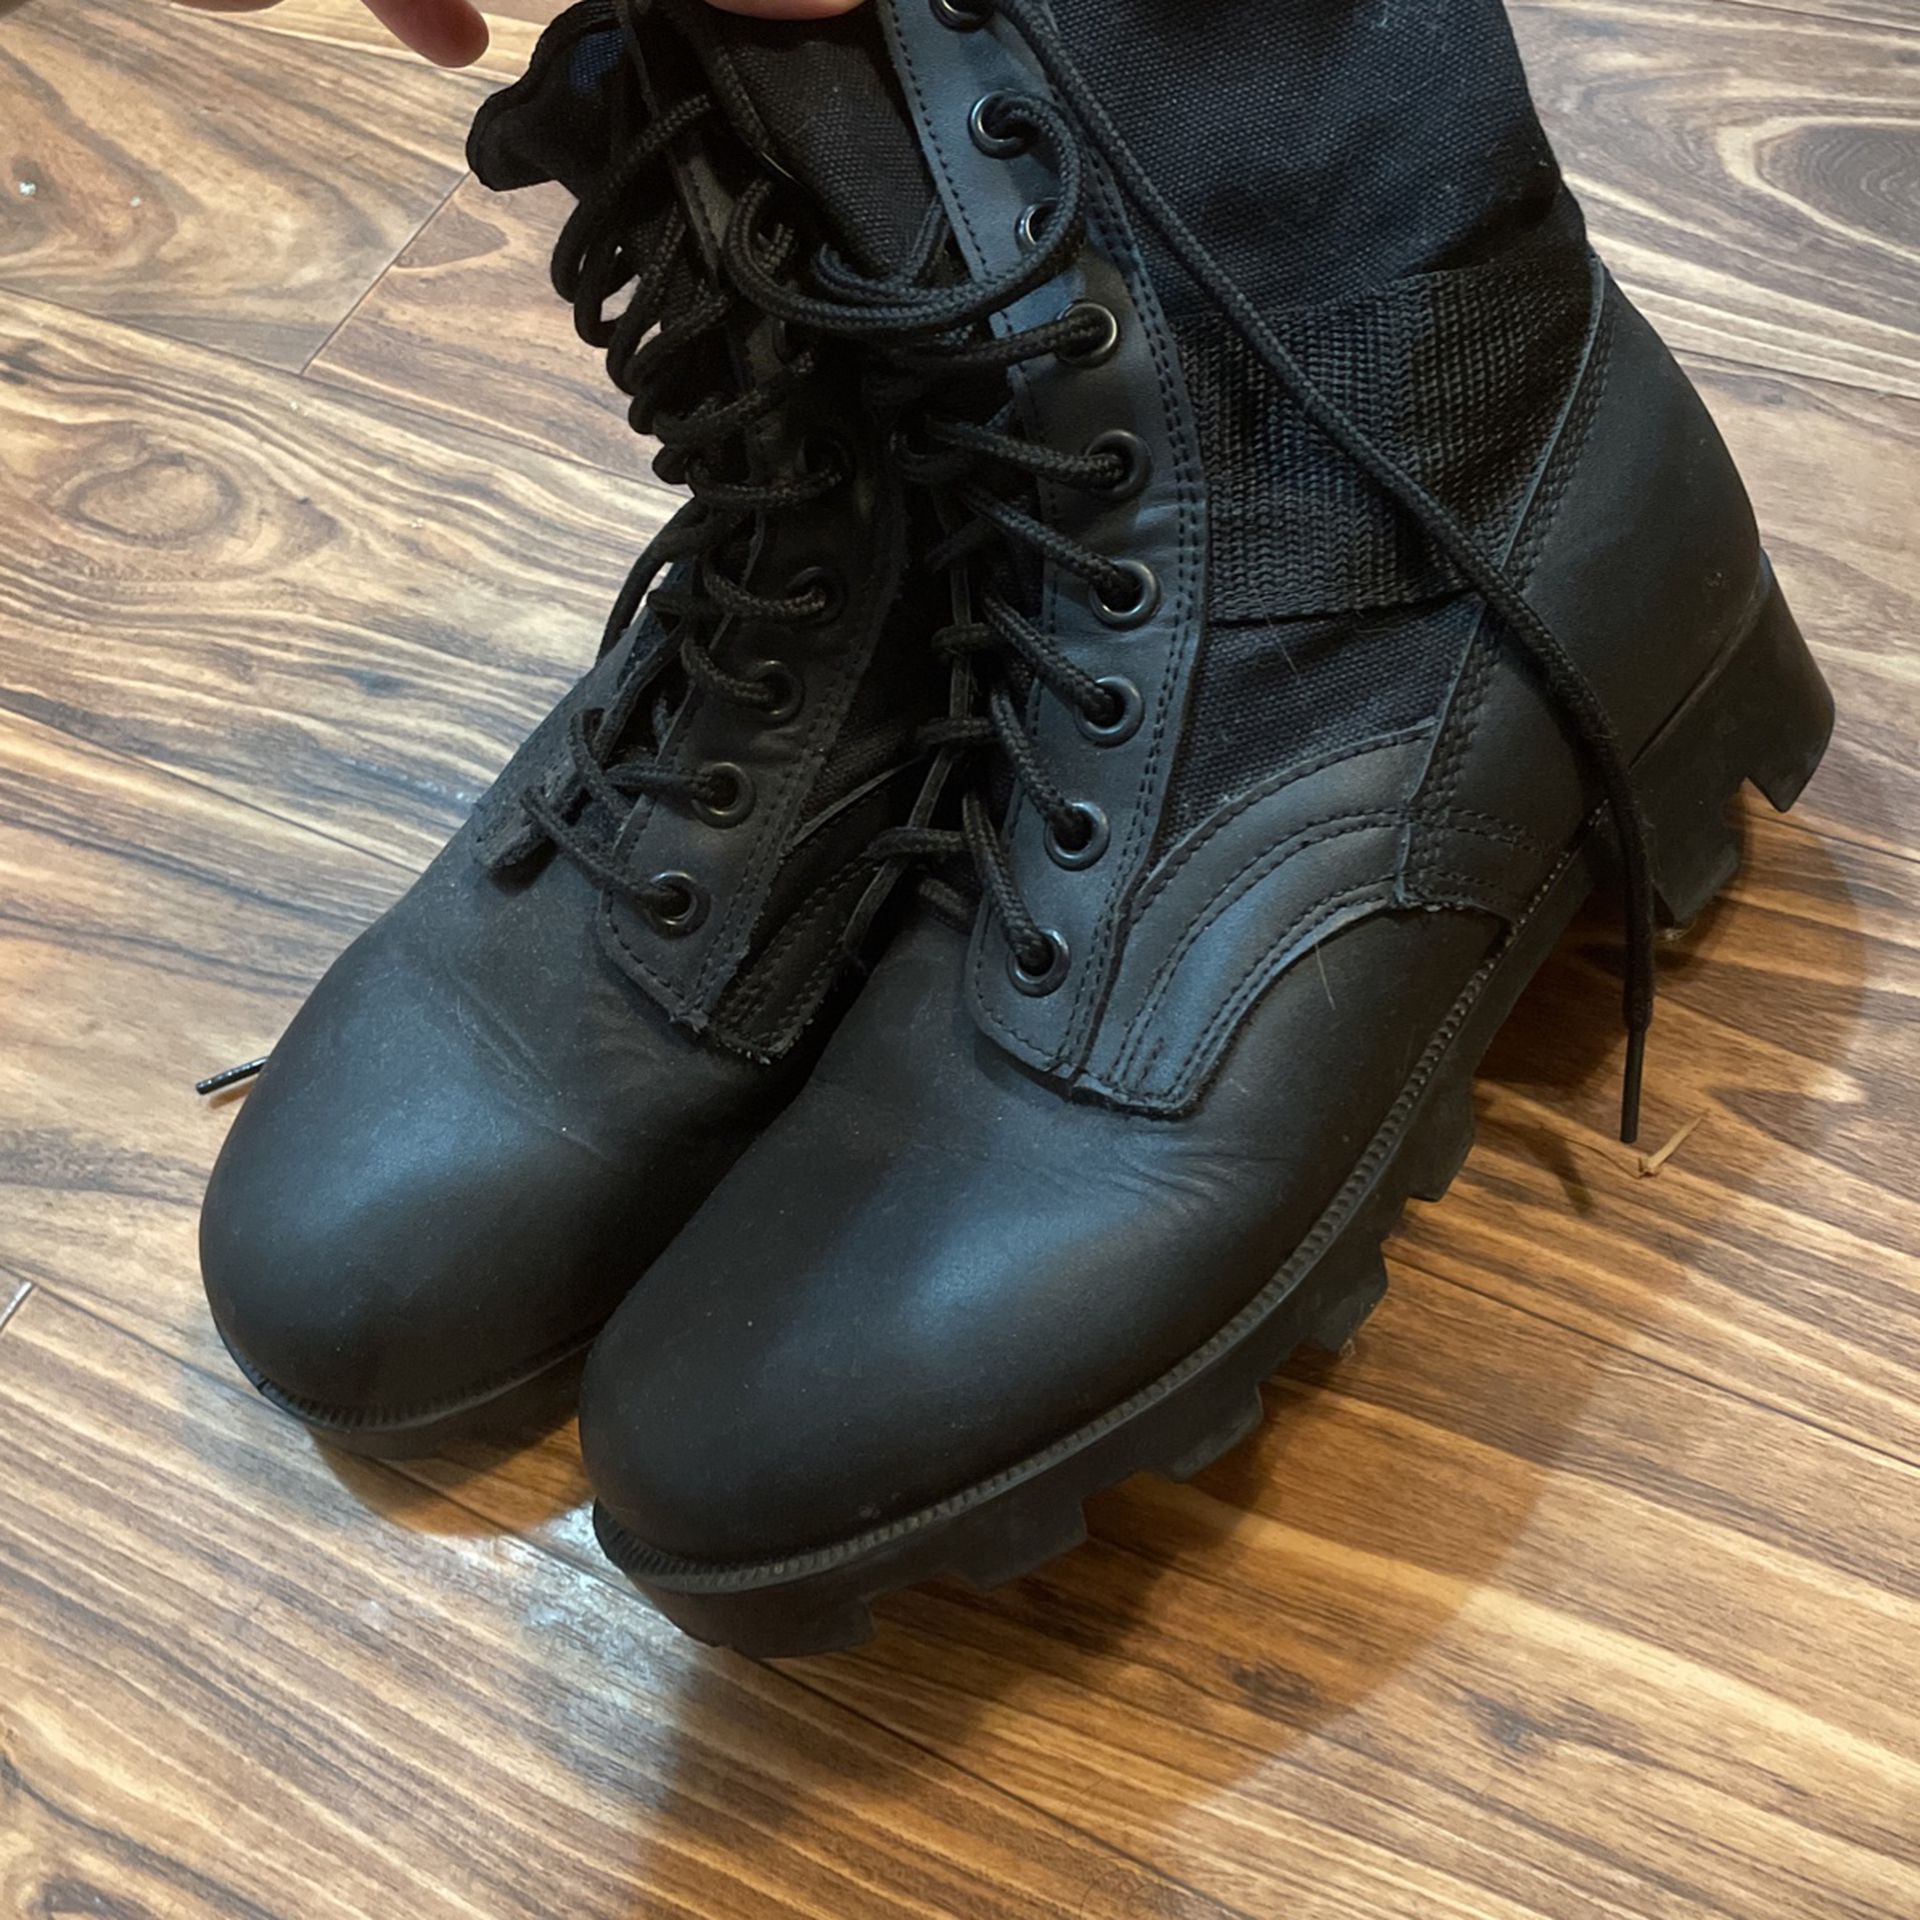 Black boots-Size 6